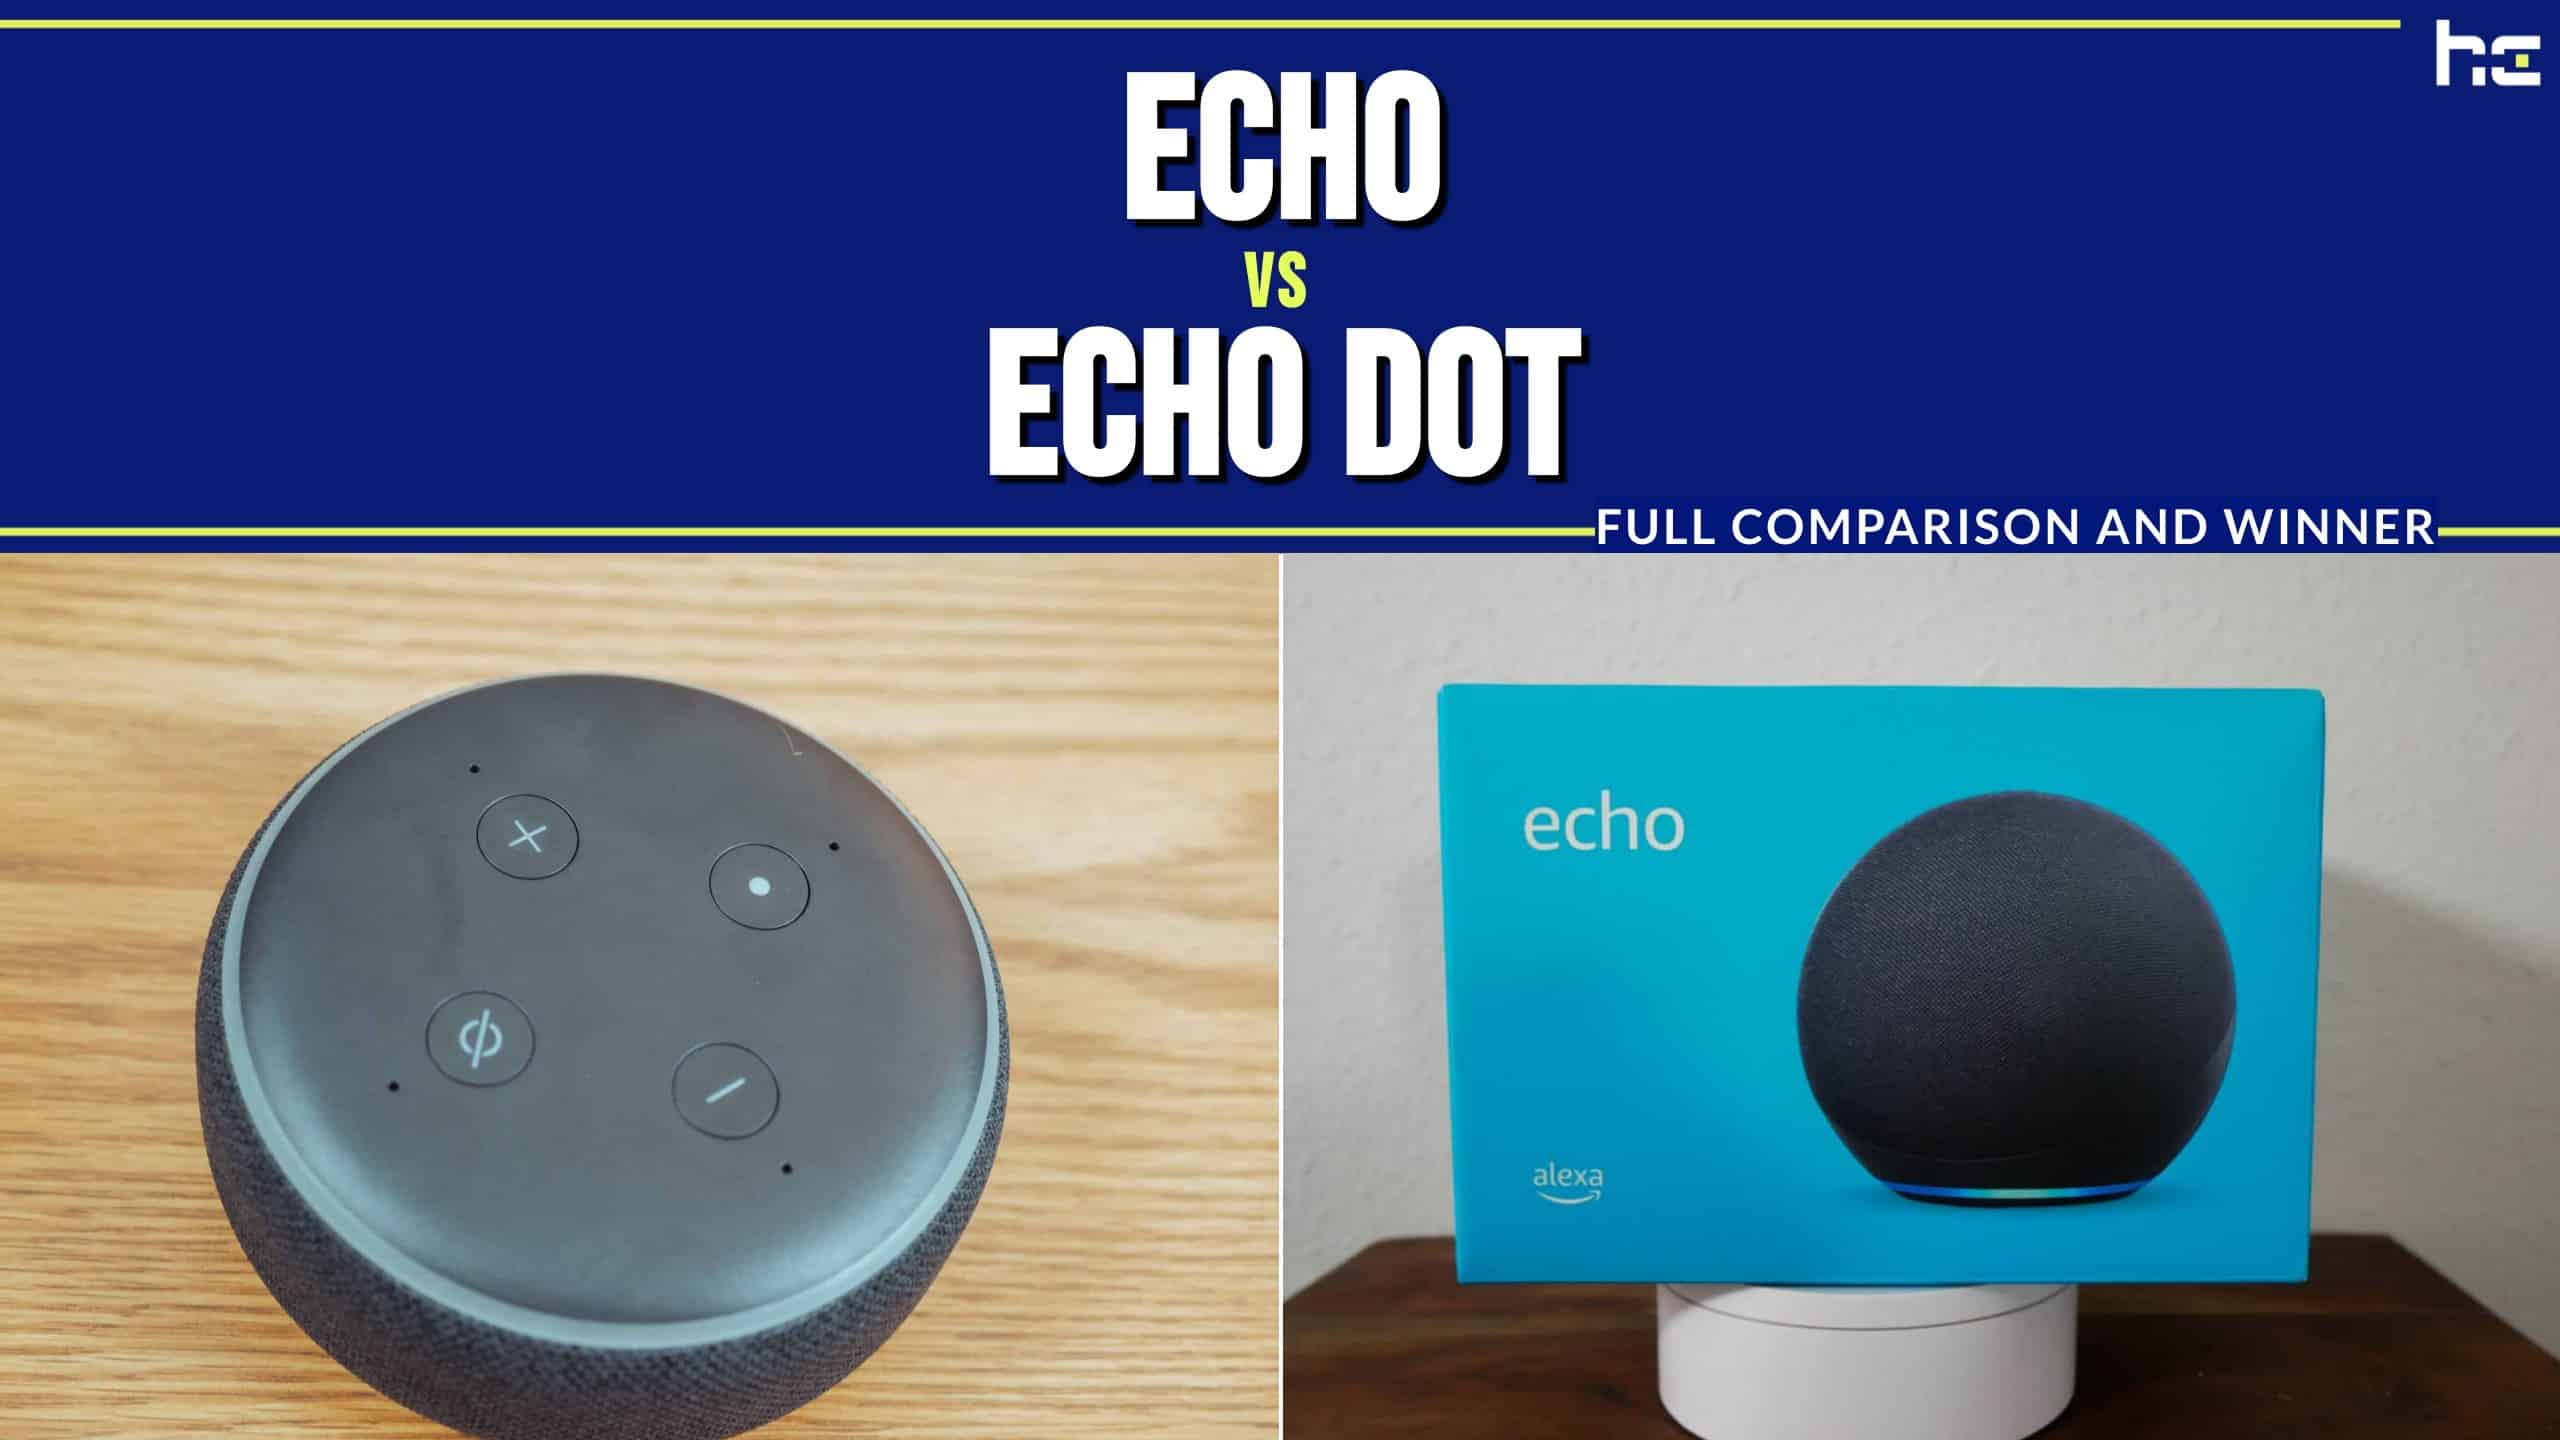 Echo vs Echo Dot